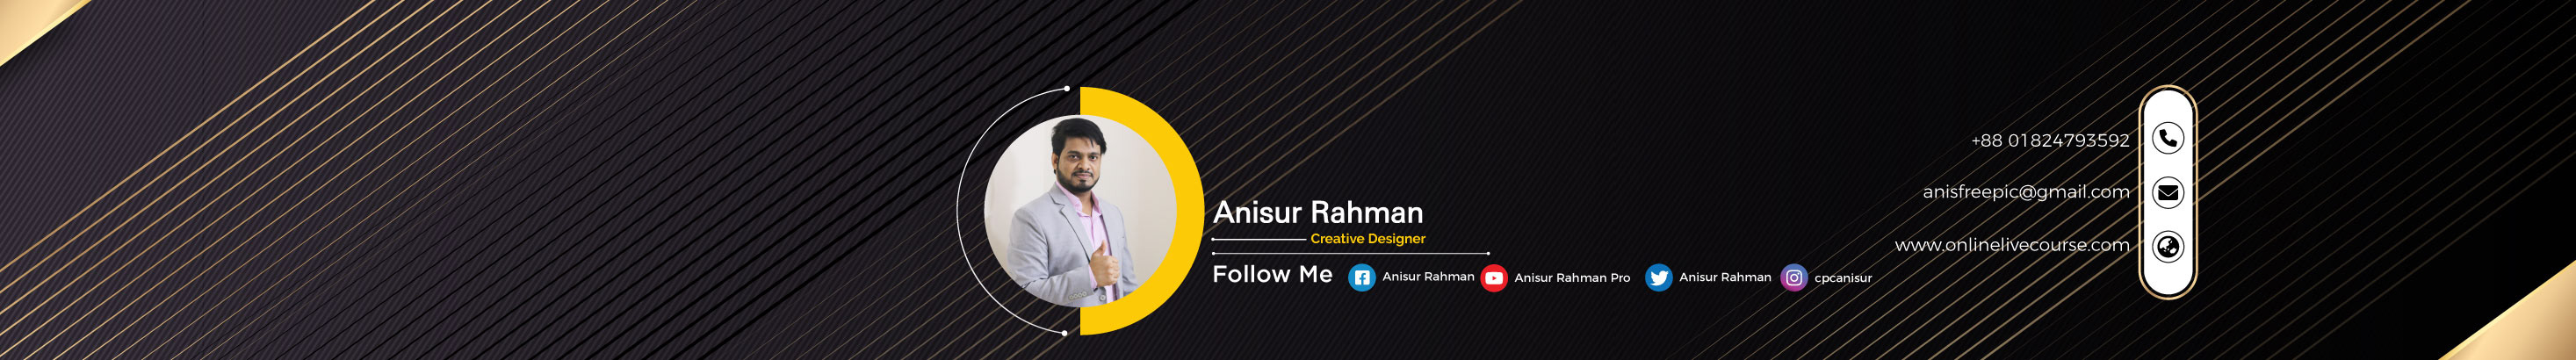 Баннер профиля Anisur Rahman